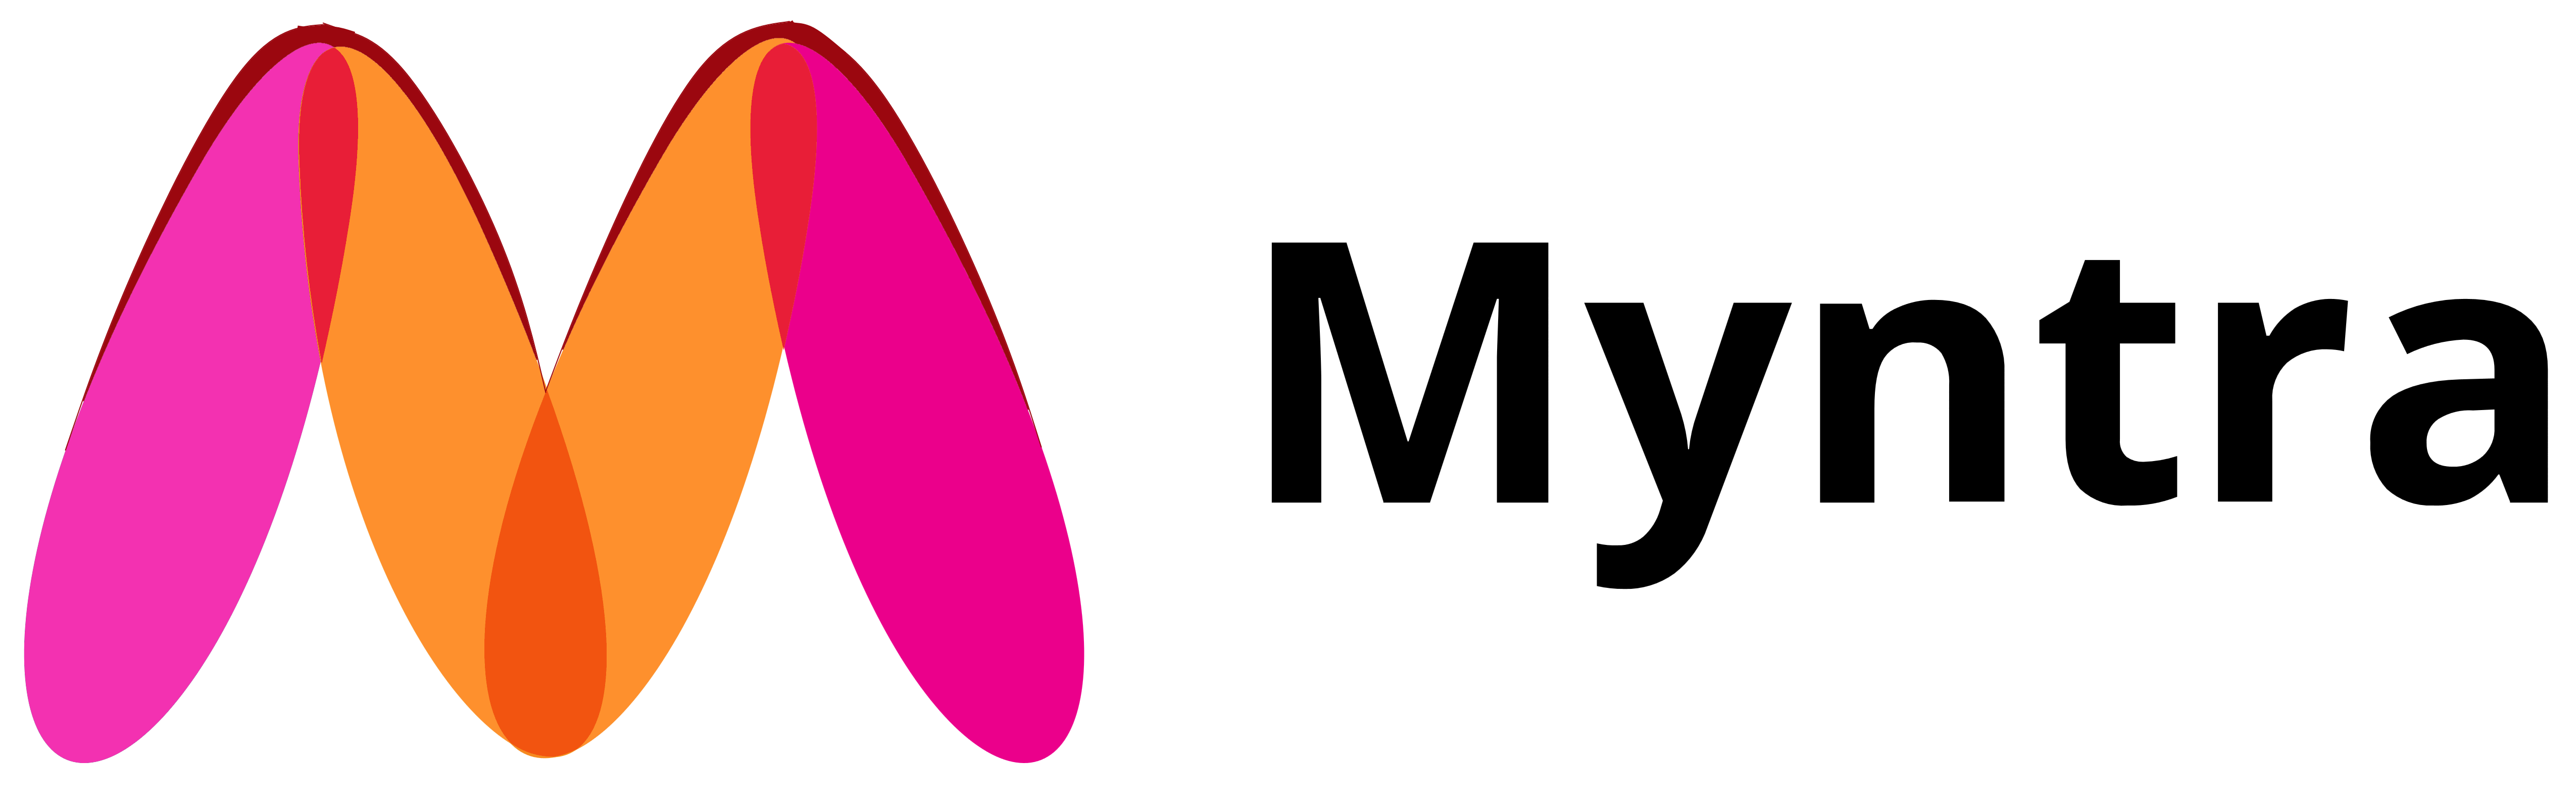 Image result for myntra logo